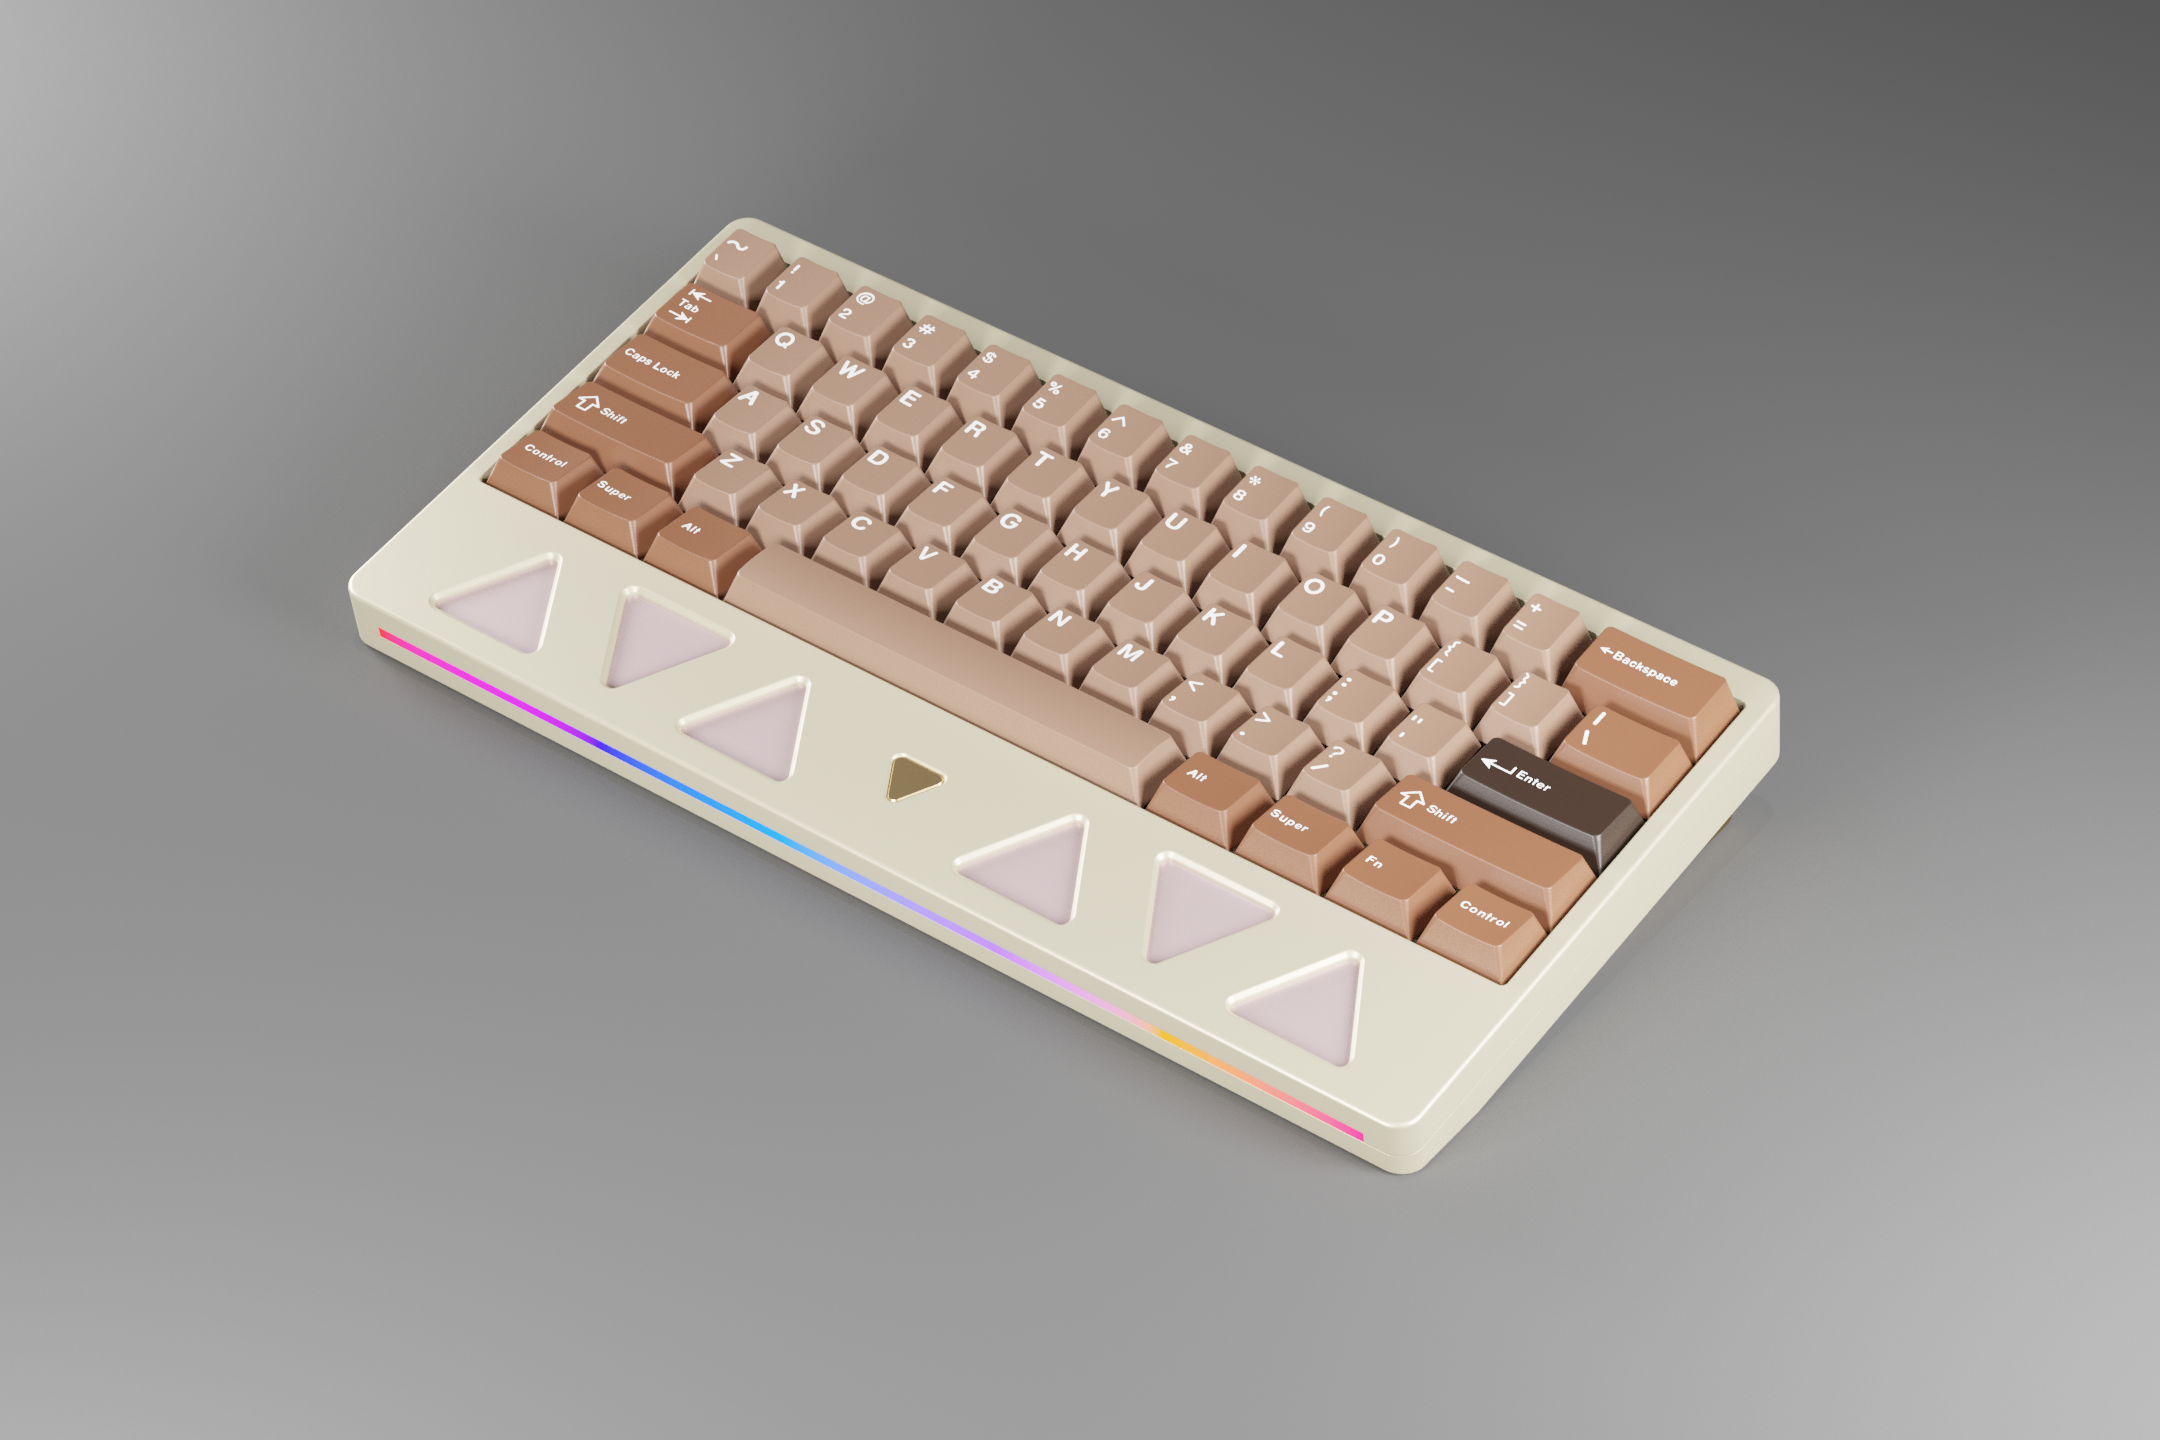 [Group-Buy] NotfromSam Trigon Coated Edition Keyboard Kit Cream / WKL / Cream